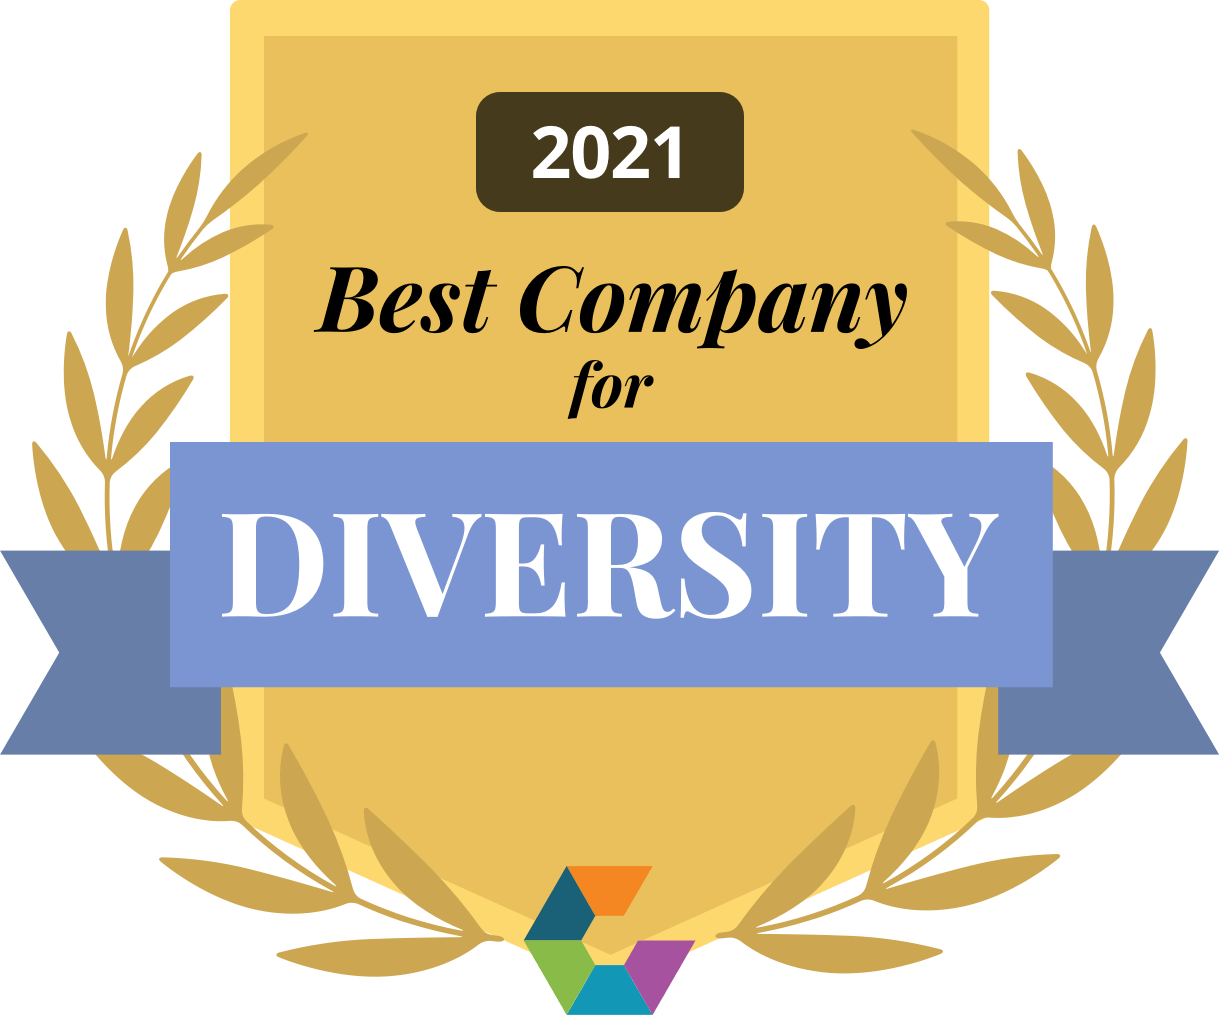 Best company for diversity 2021 award